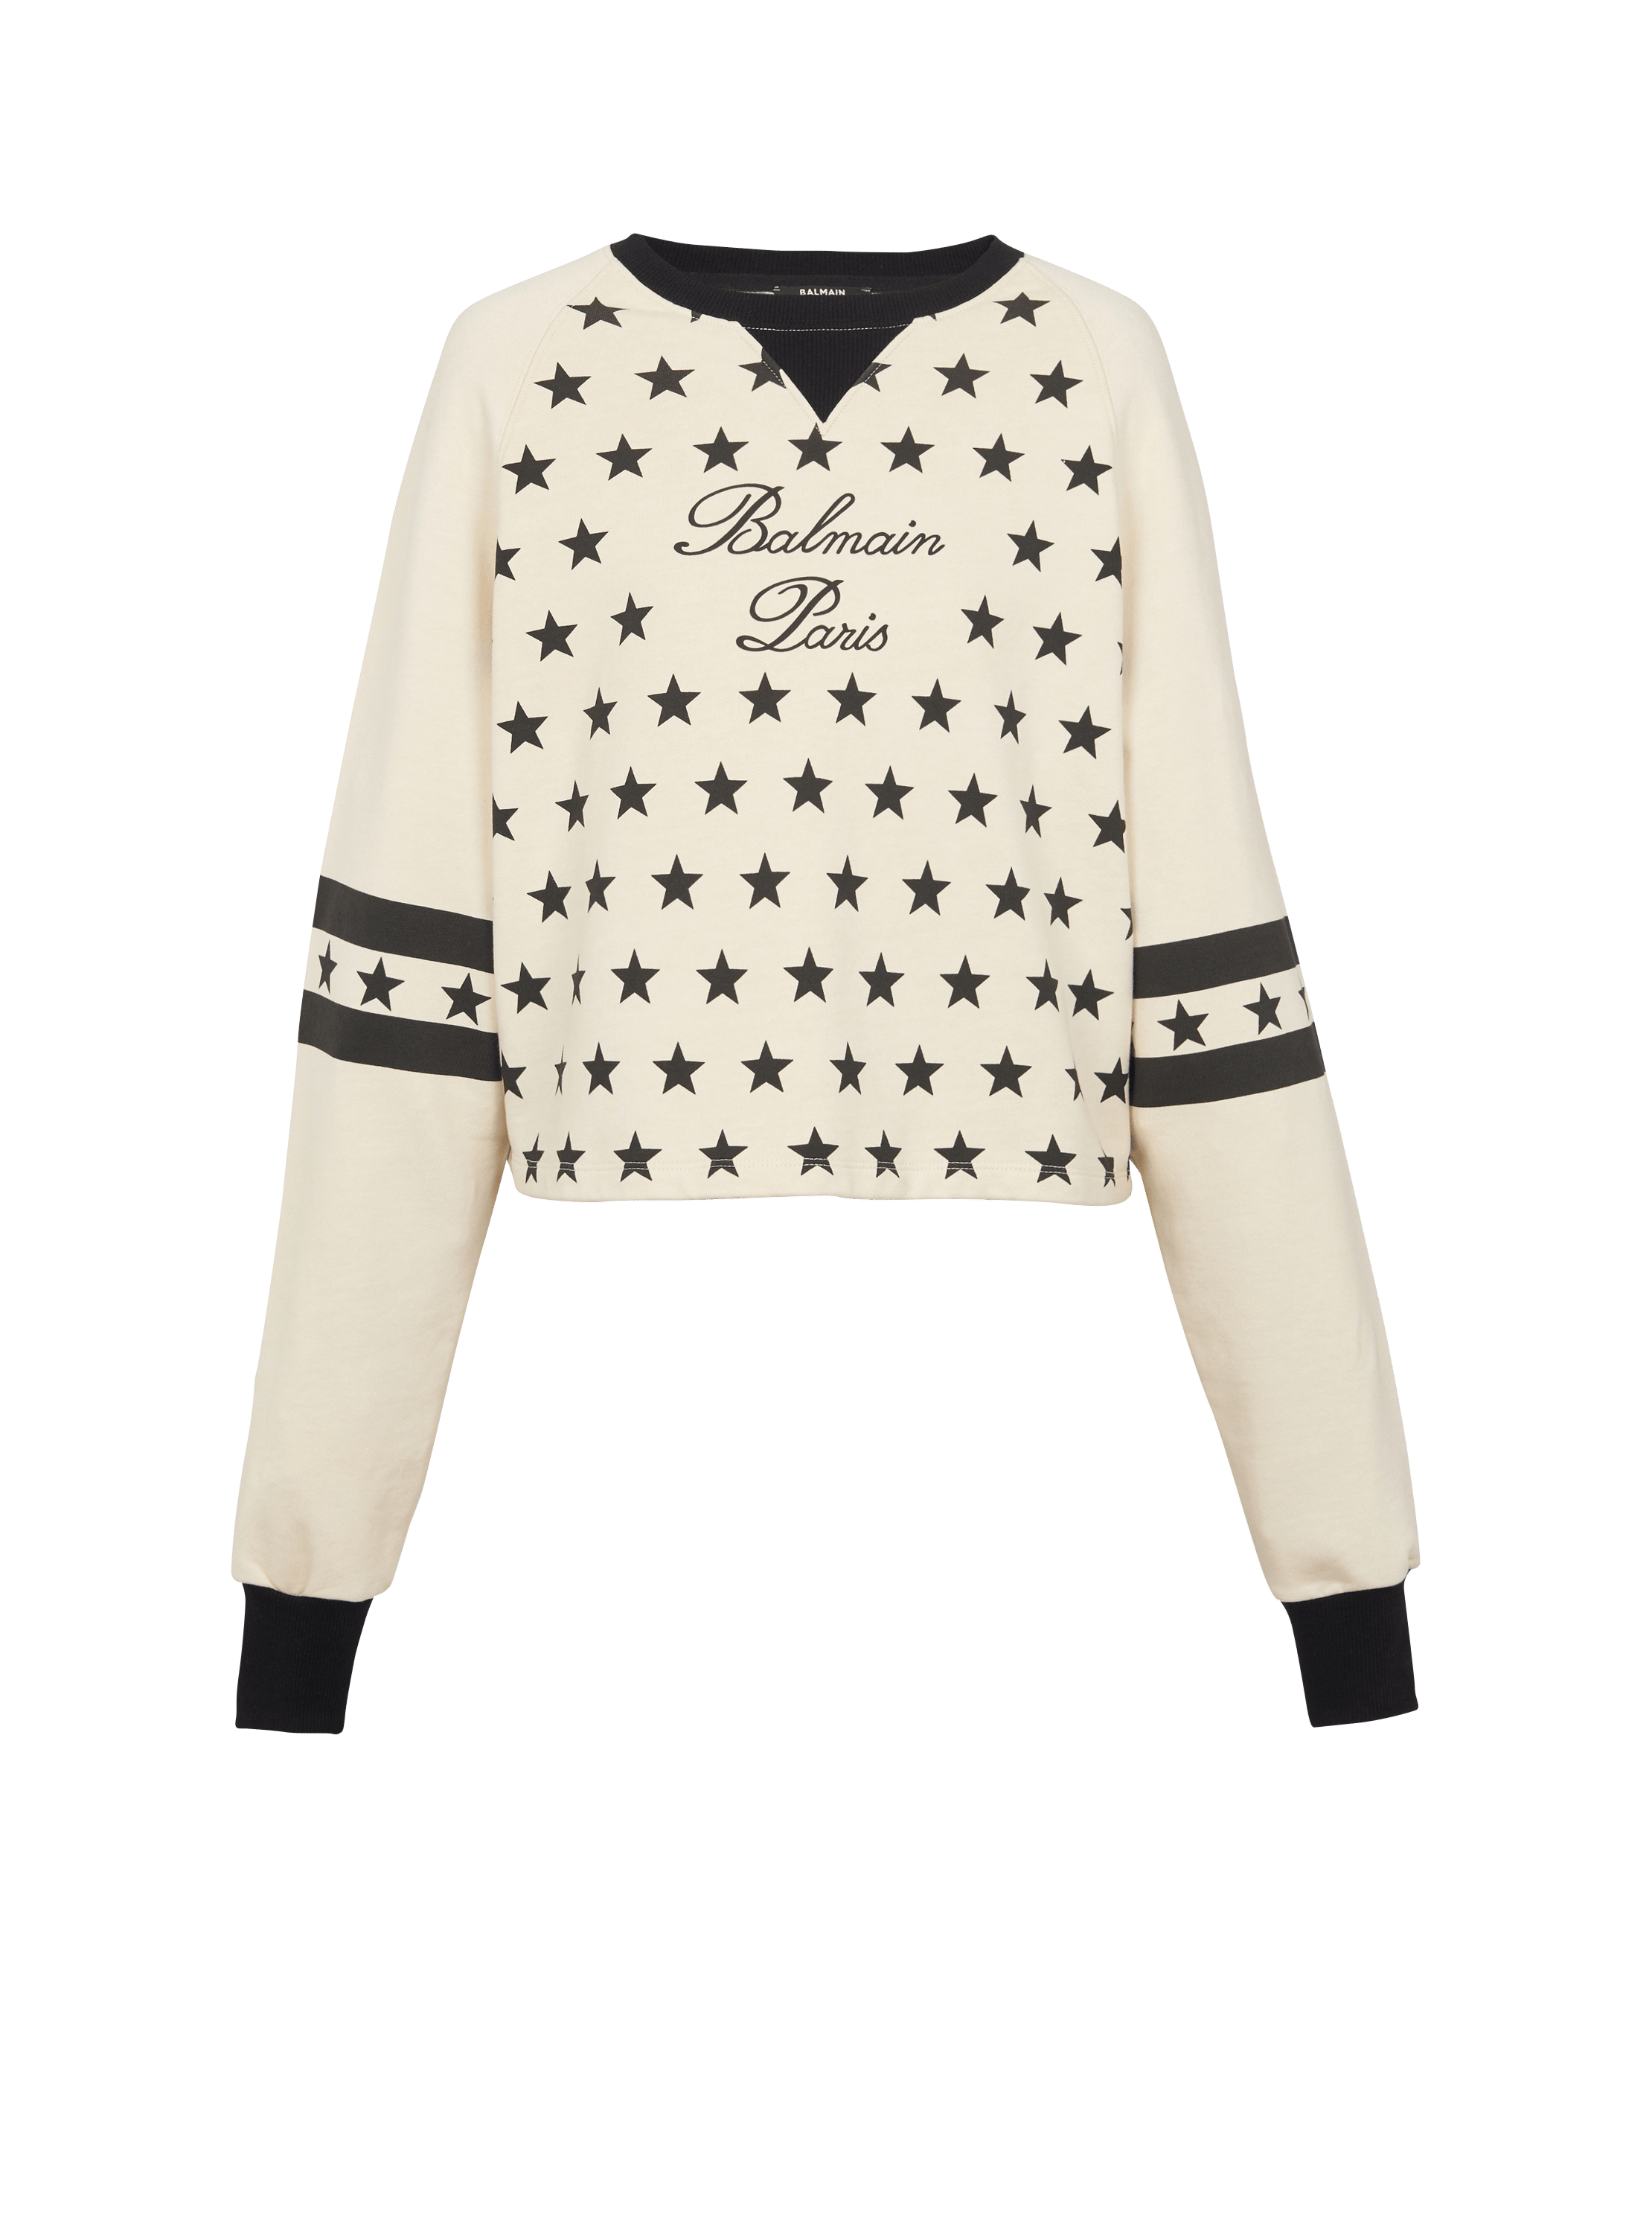 Balmain Signature Sweatshirt mit Sternen, beige, hi-res